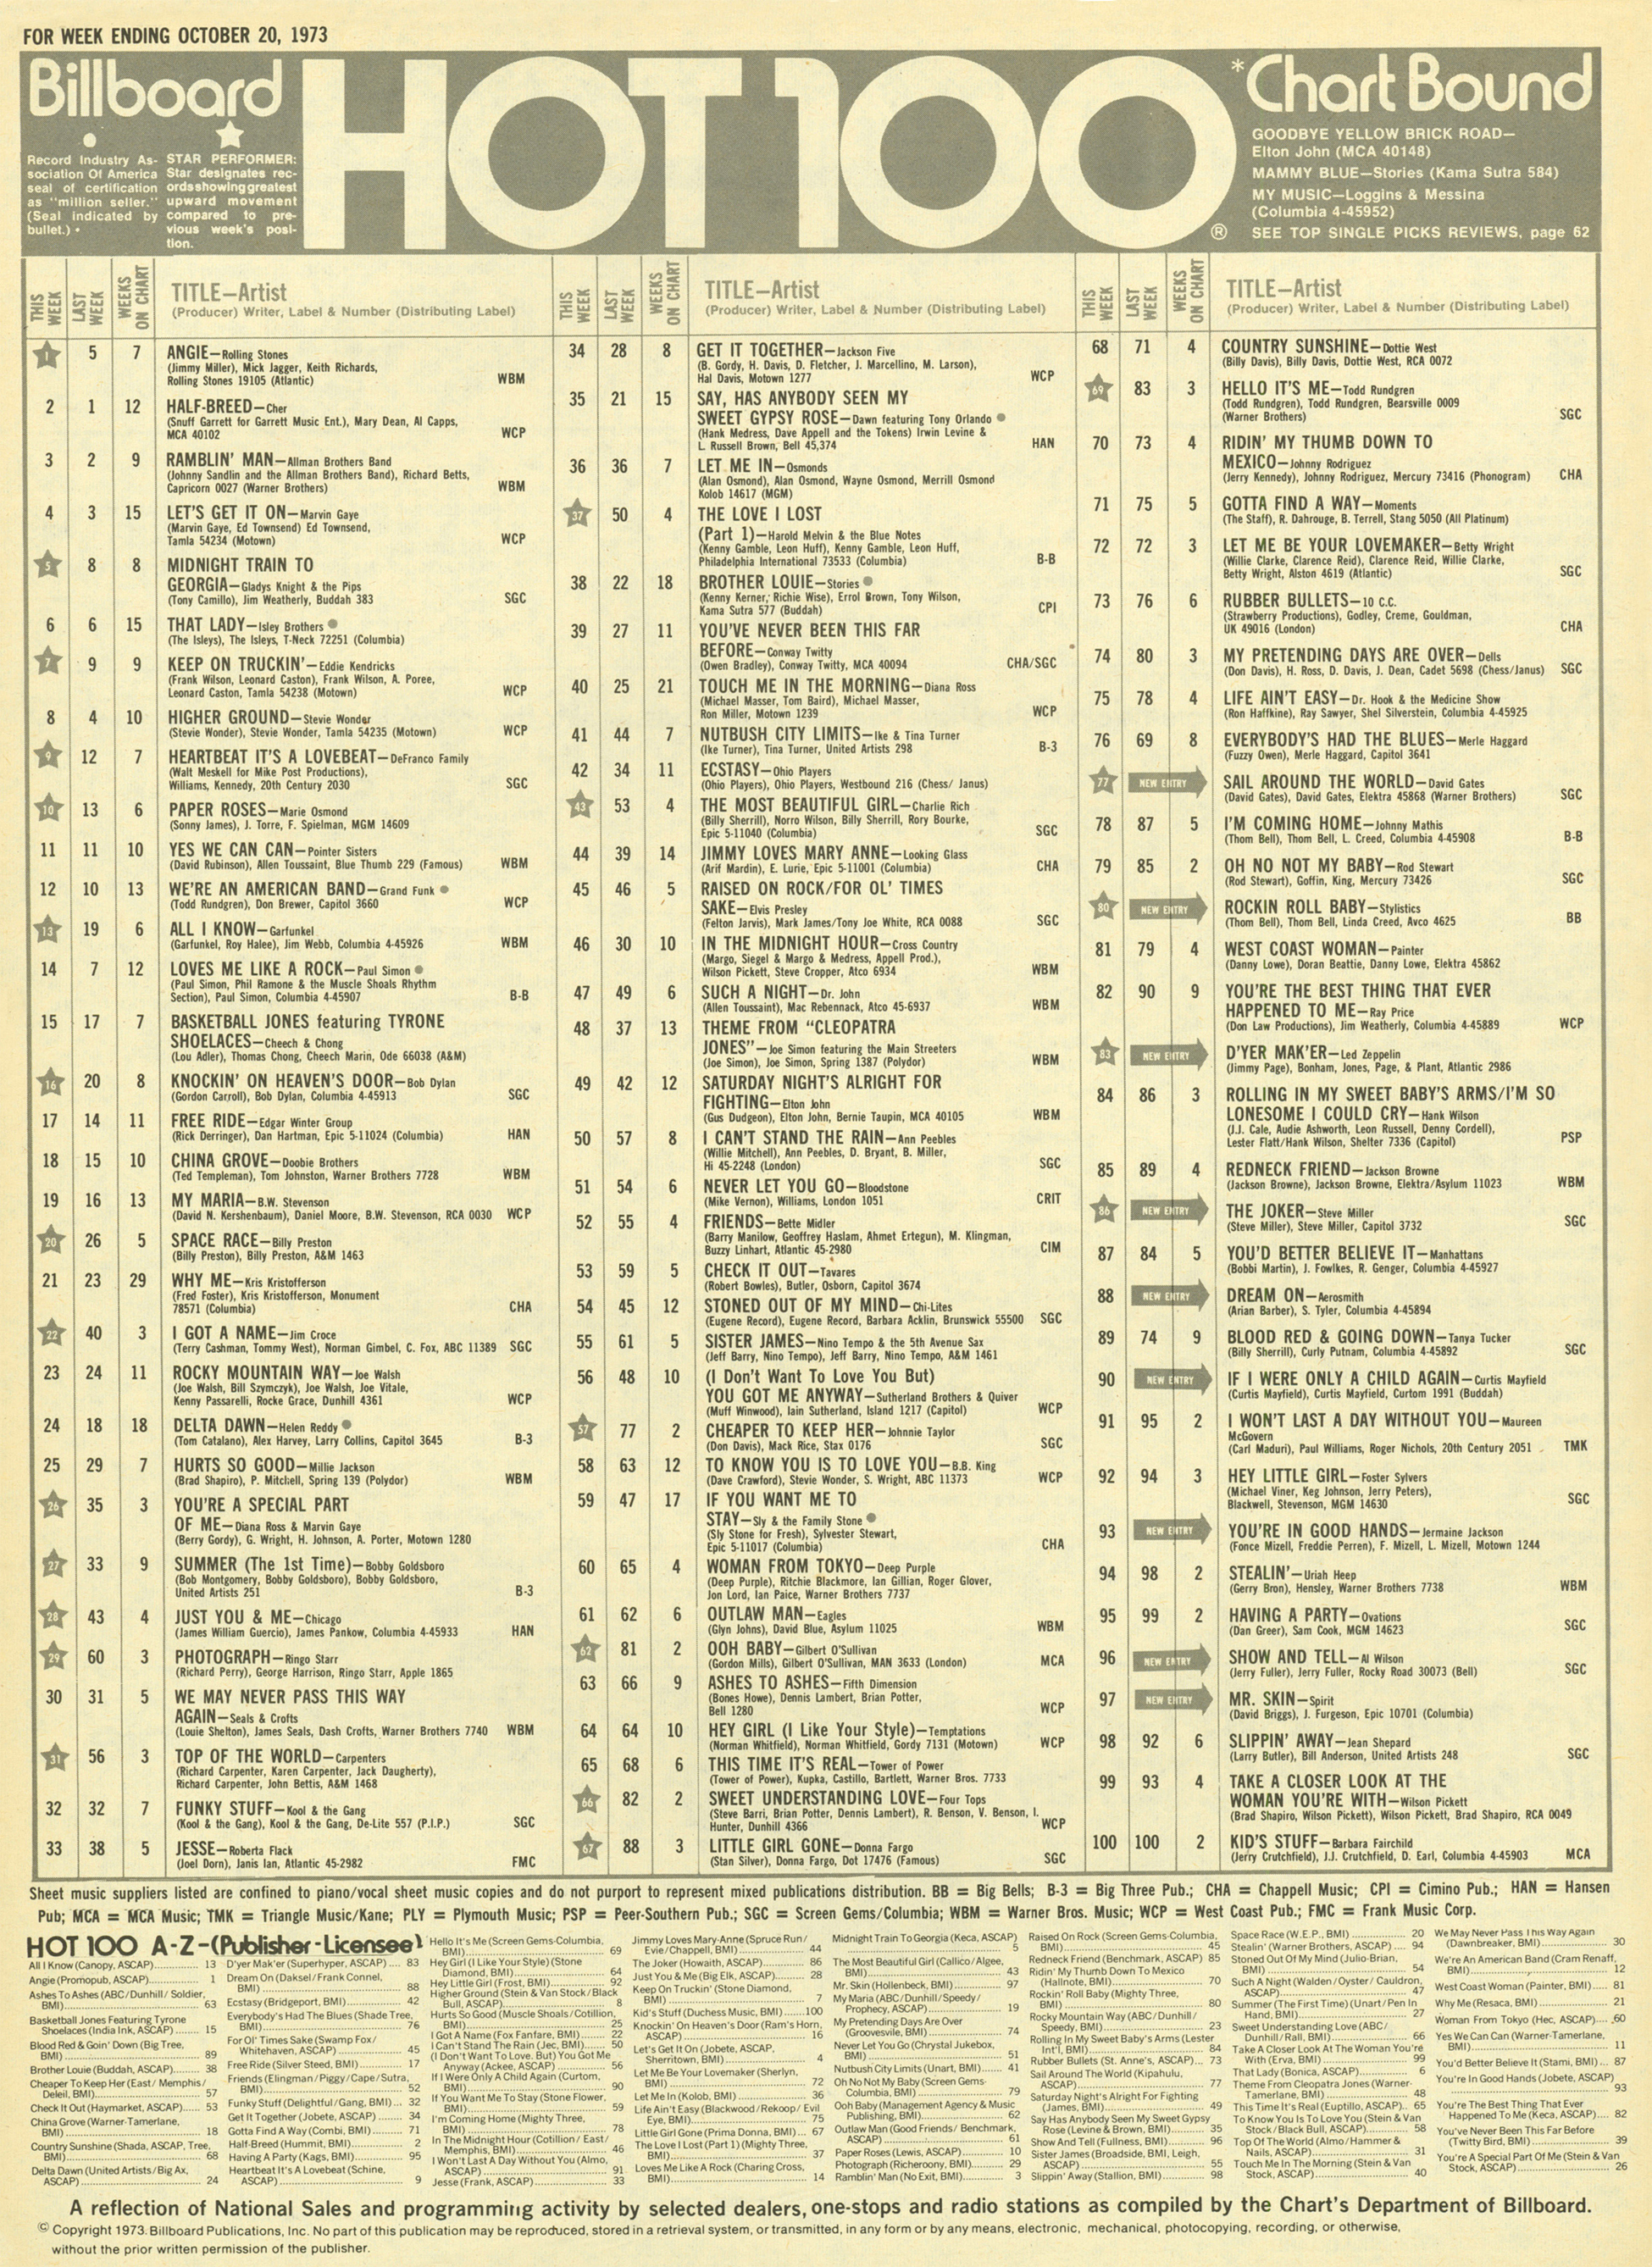 Billboard Charts 1973 By Week